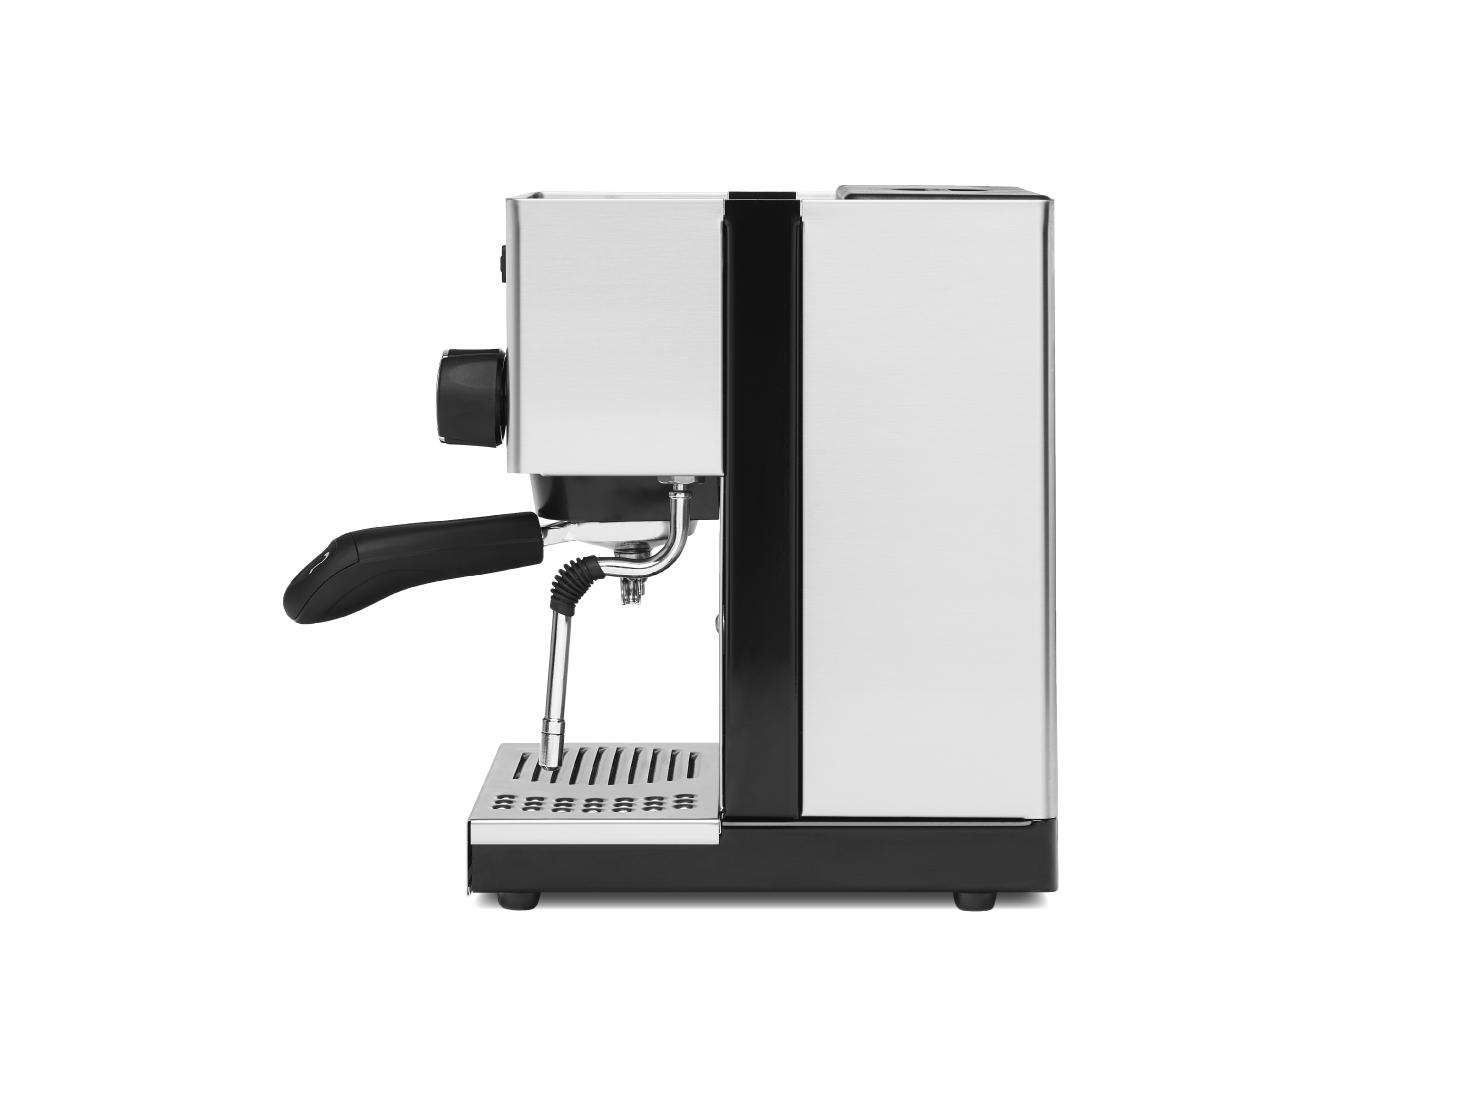 Rancilio Silvia M 2019 Update Stainless Steel Manual Espresso Machine